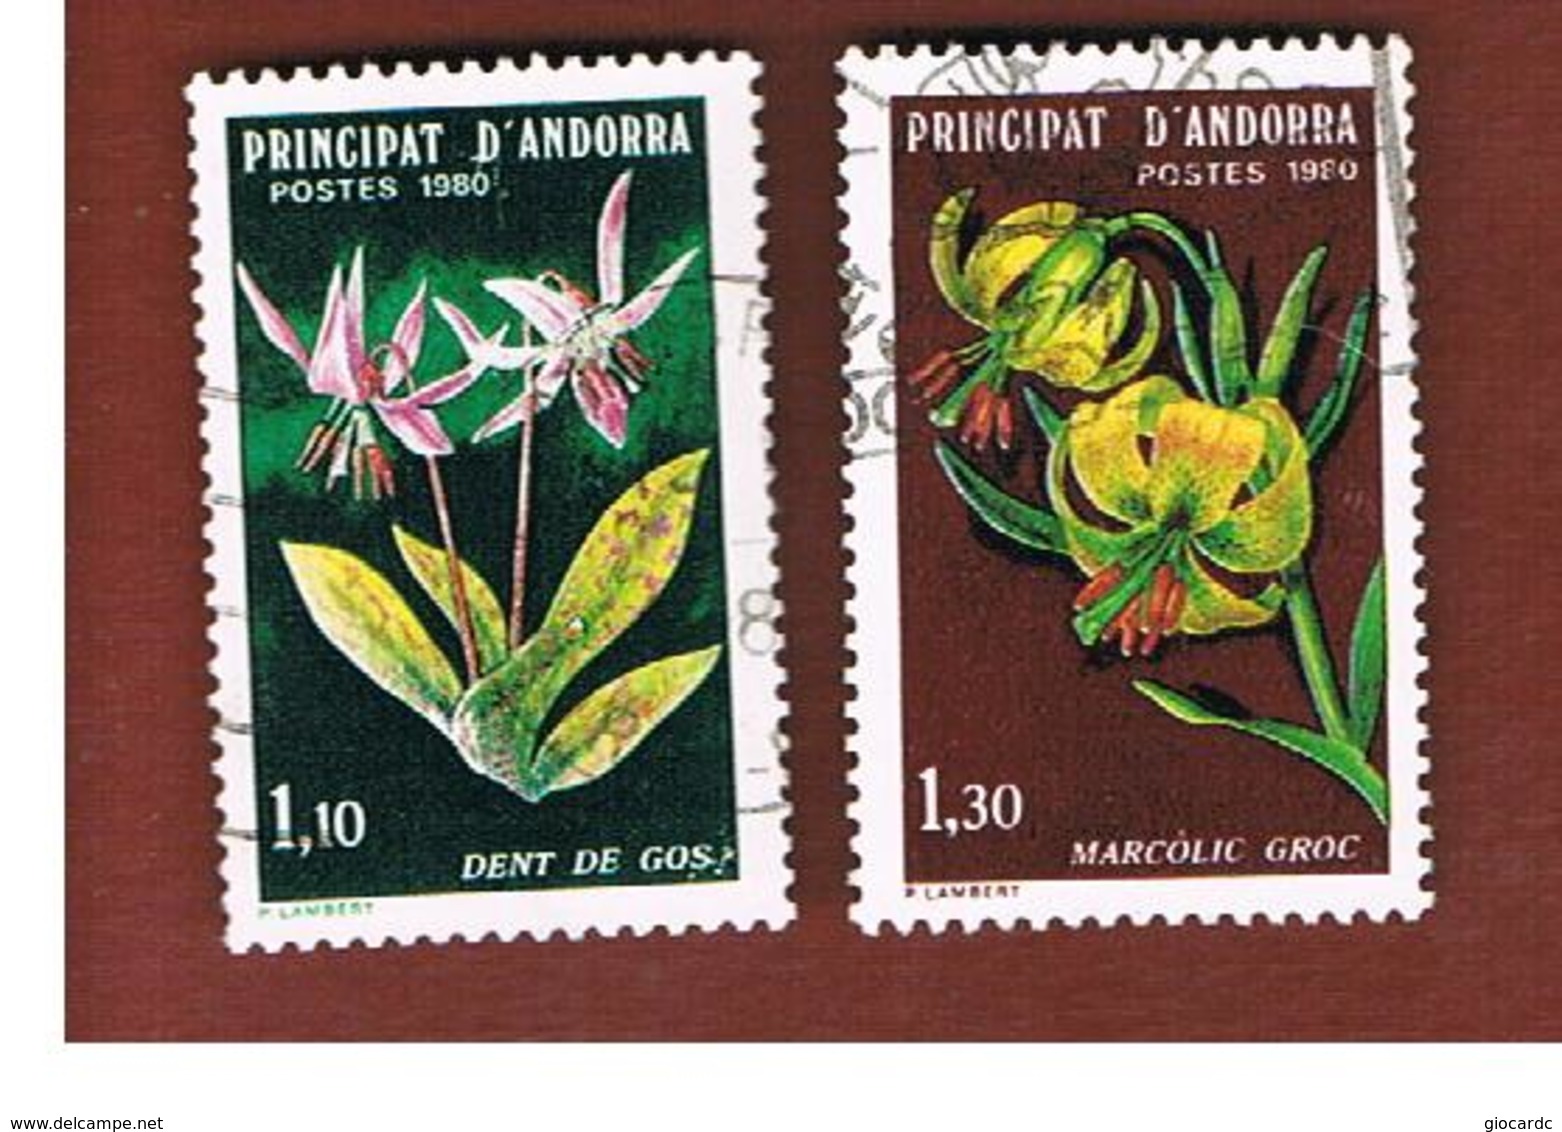 ANDORRA FRANCESE (FRENCH ANDORRA)  -  SG F306.307 - 1980   FLOWERS  (COMPLET SET OF 2)  -     USED - Usados